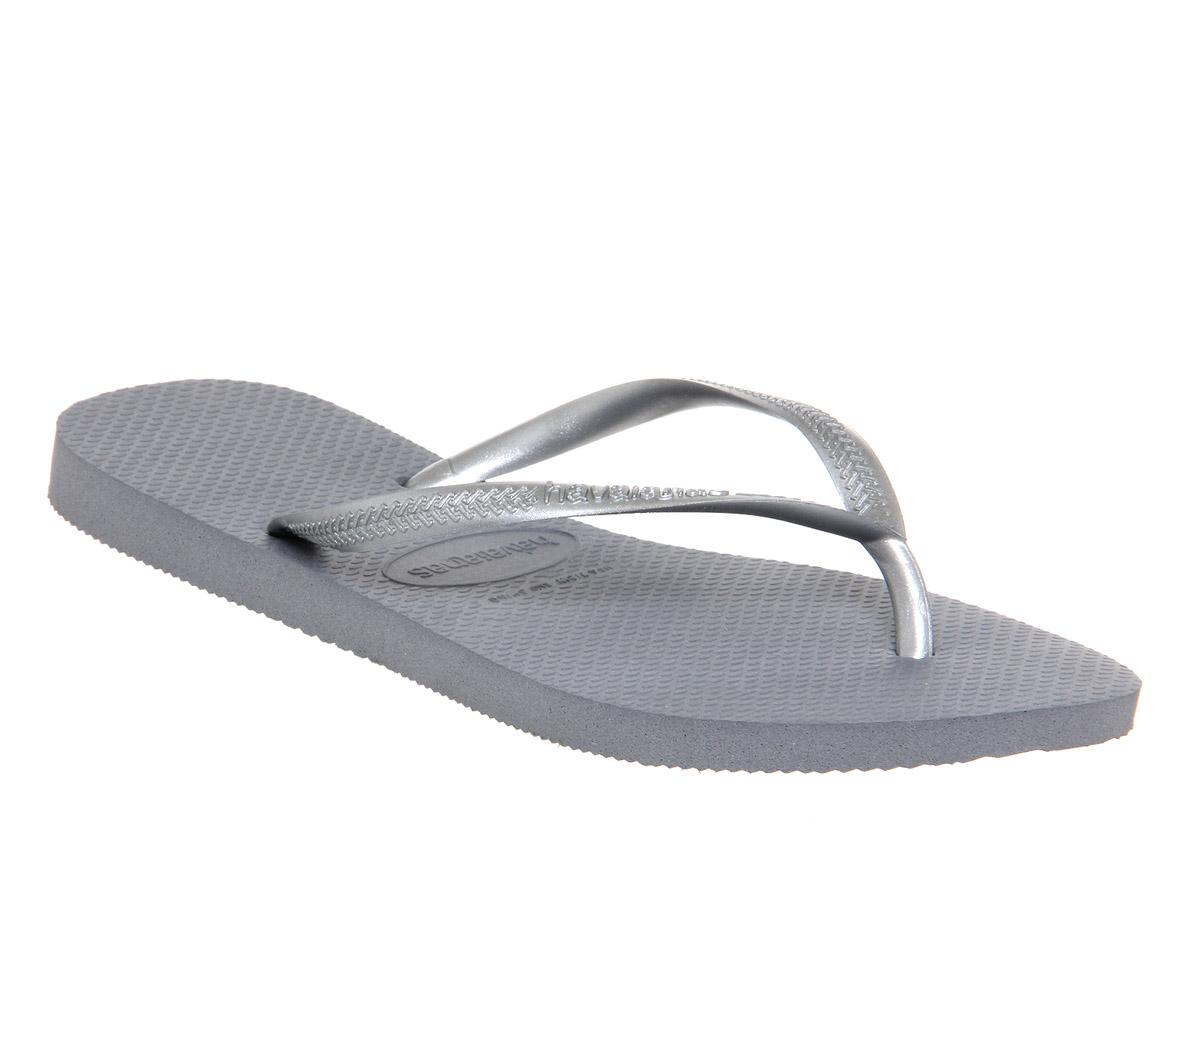 Havaianas Slim Flip Flop Steel Grey - Sandals